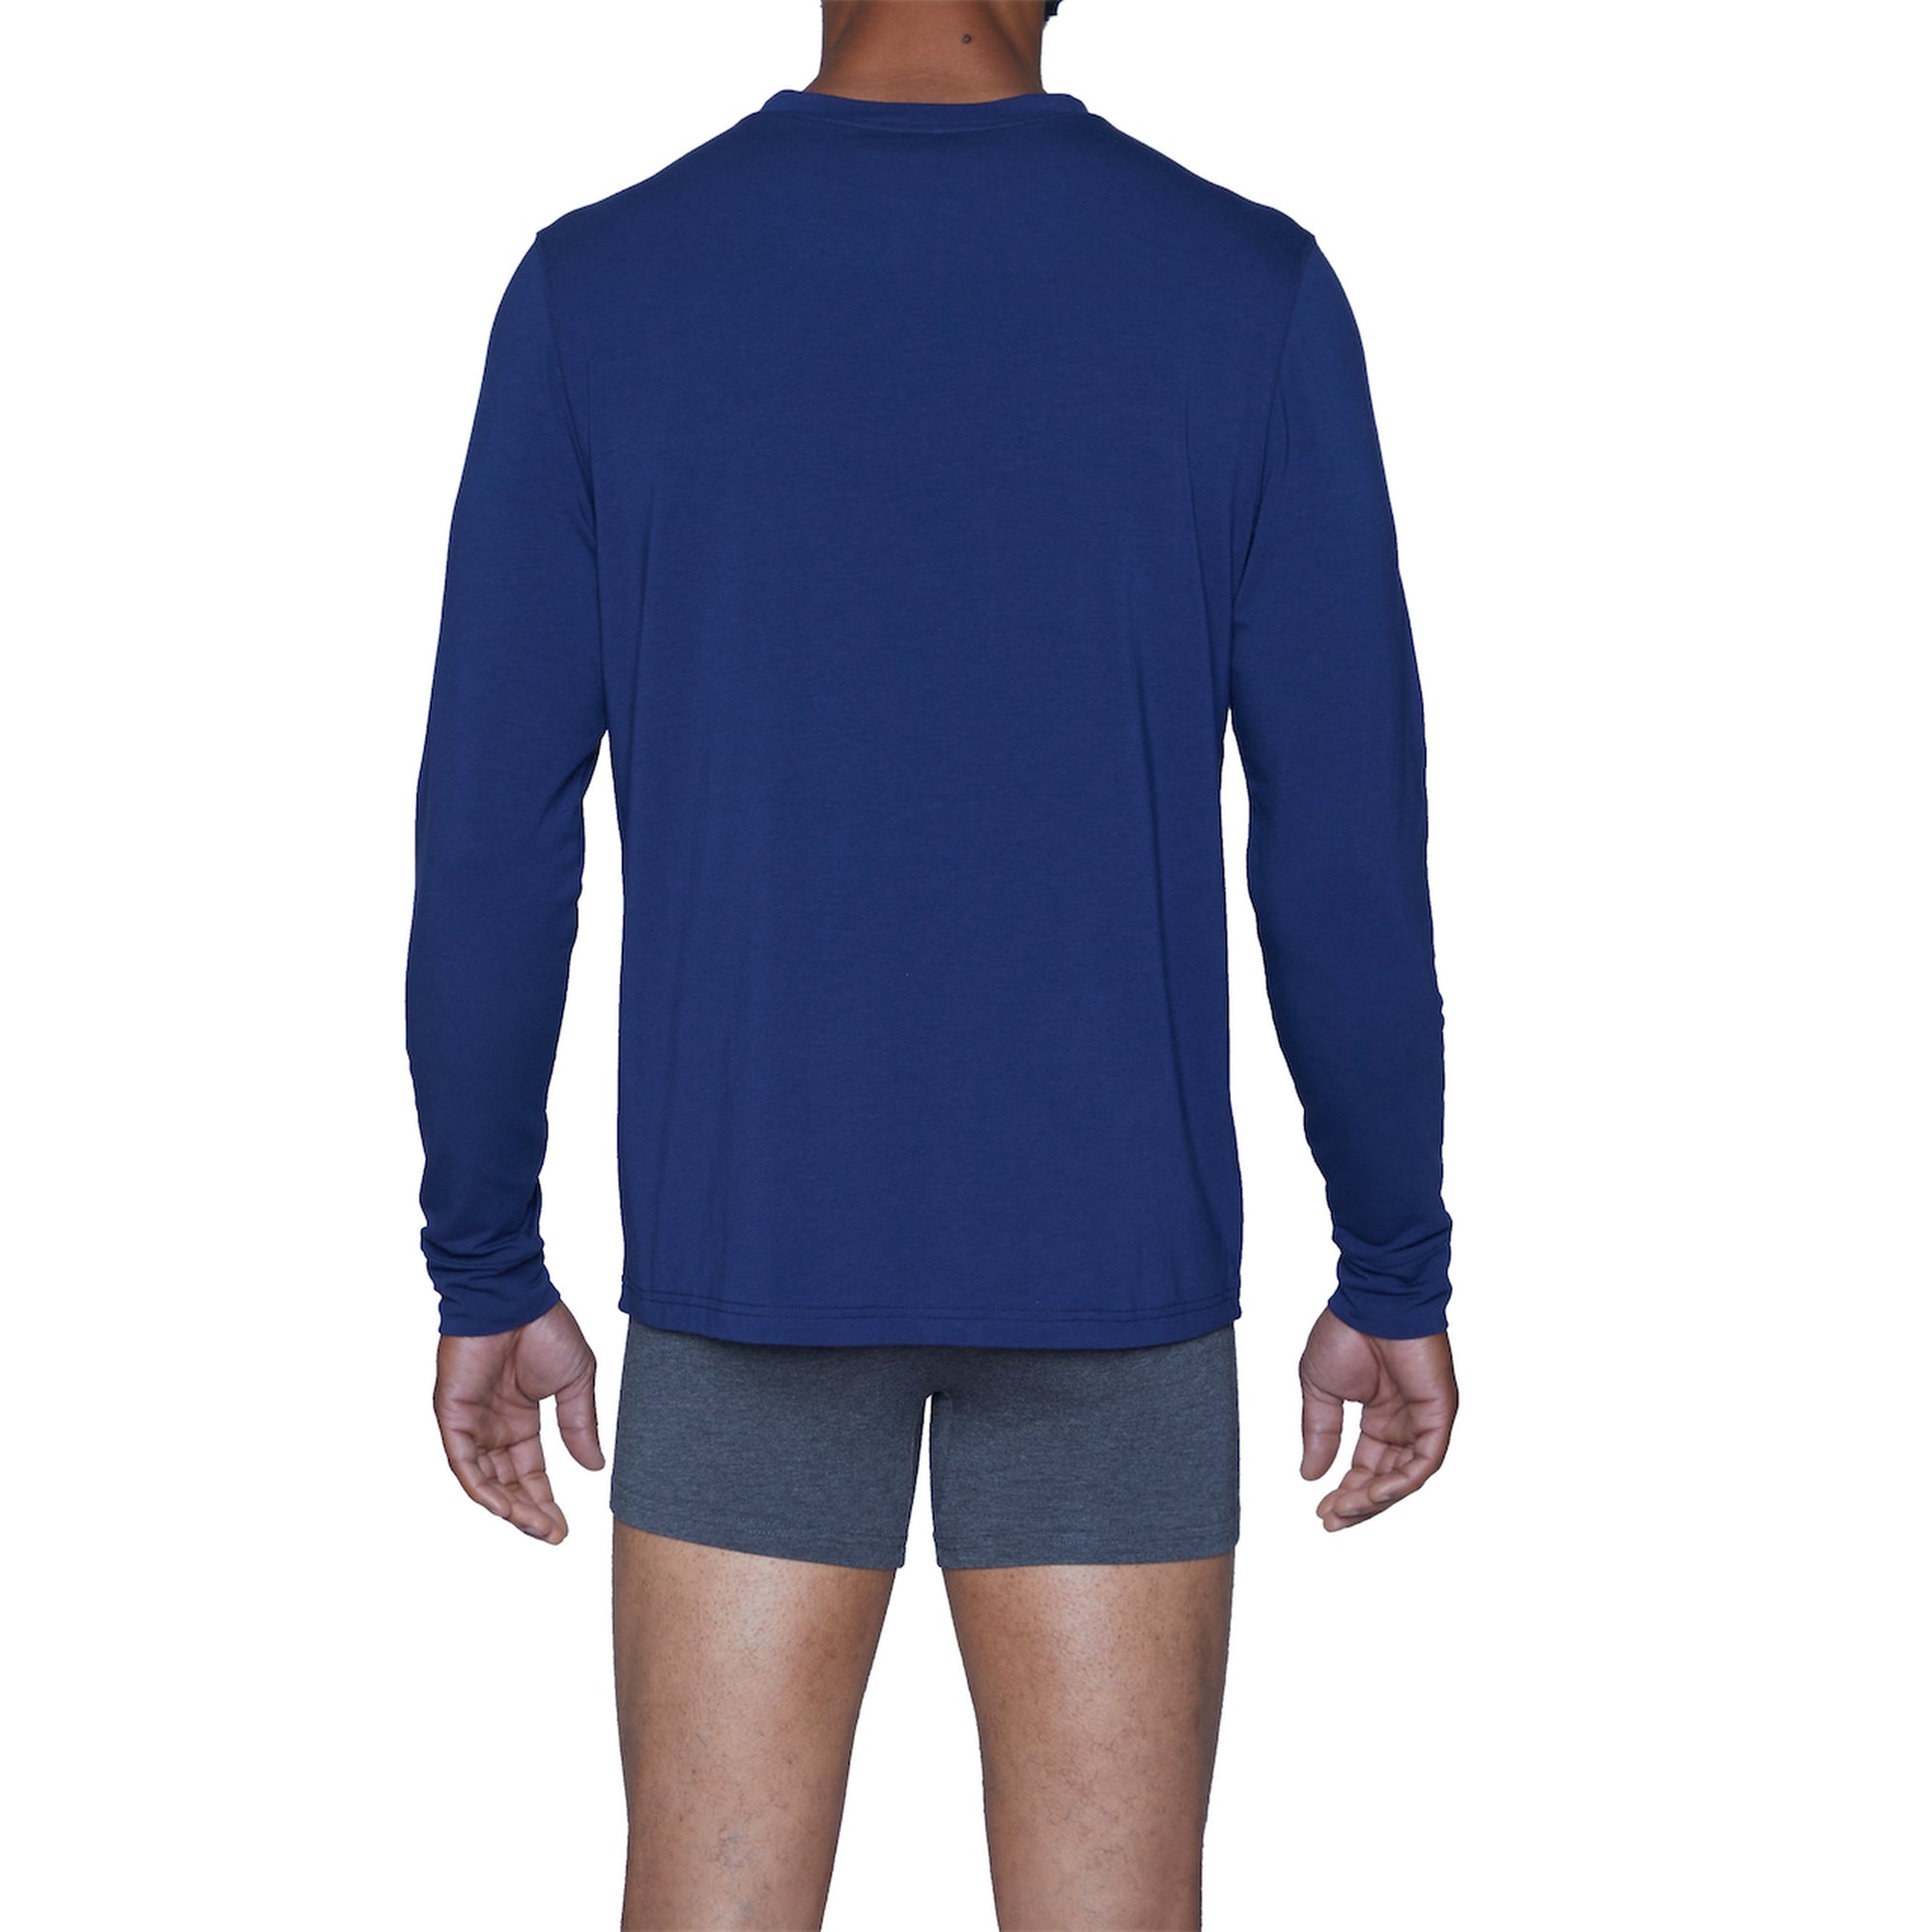 Henley Lounge Shirt in Deep Space Blue by Wood Underwear